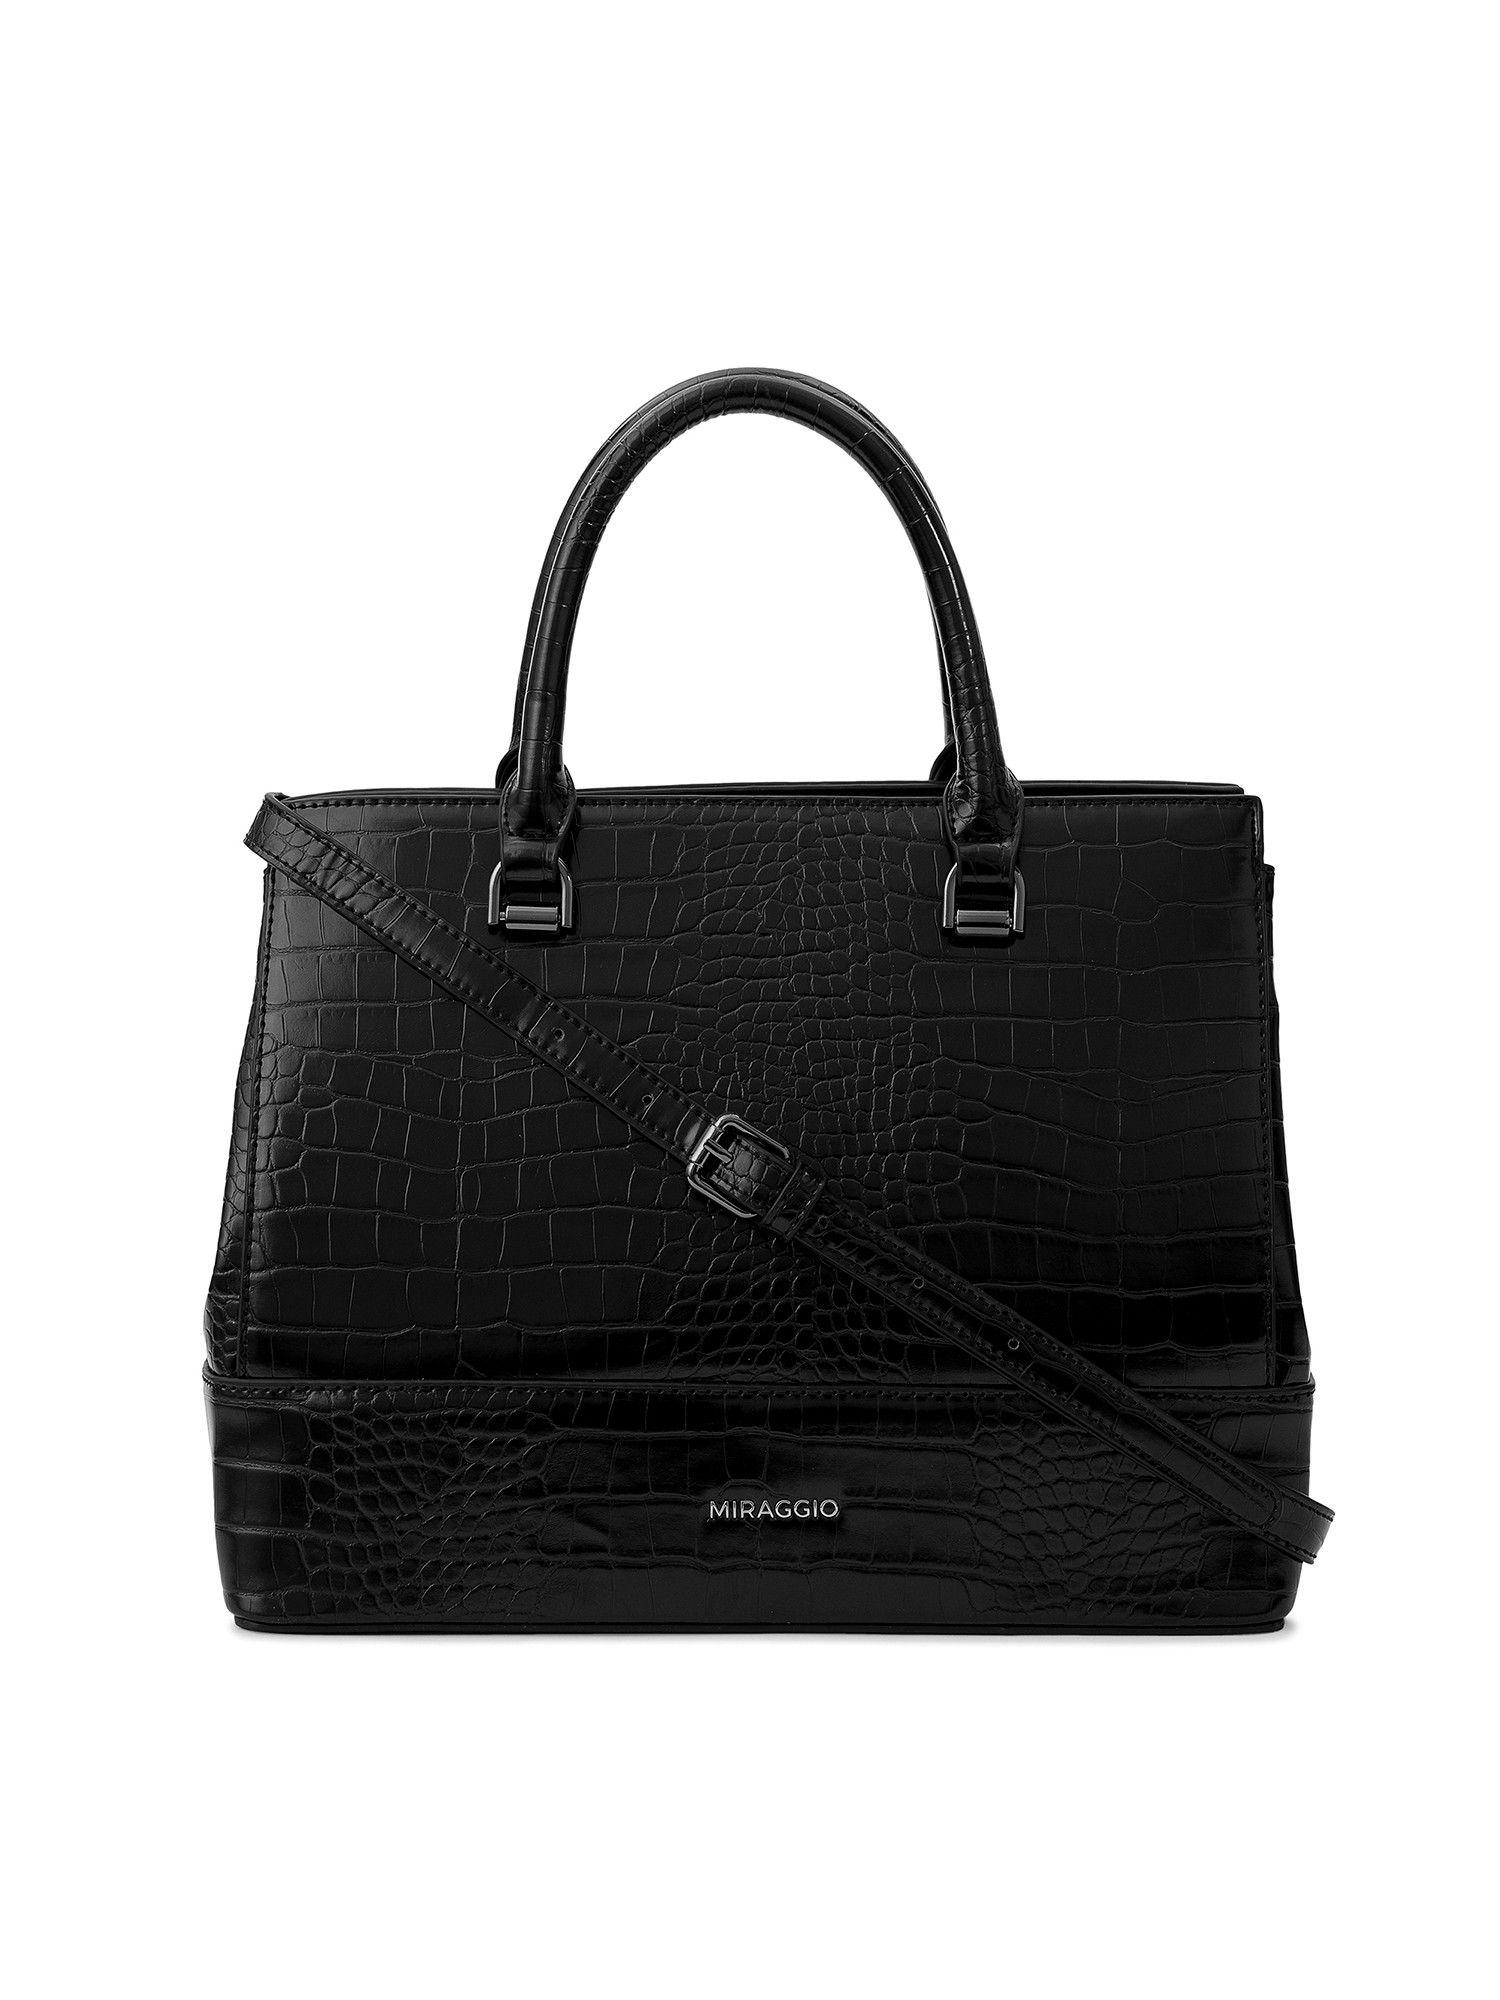 clara satchel handbag for women with sling/crossbody bag - black